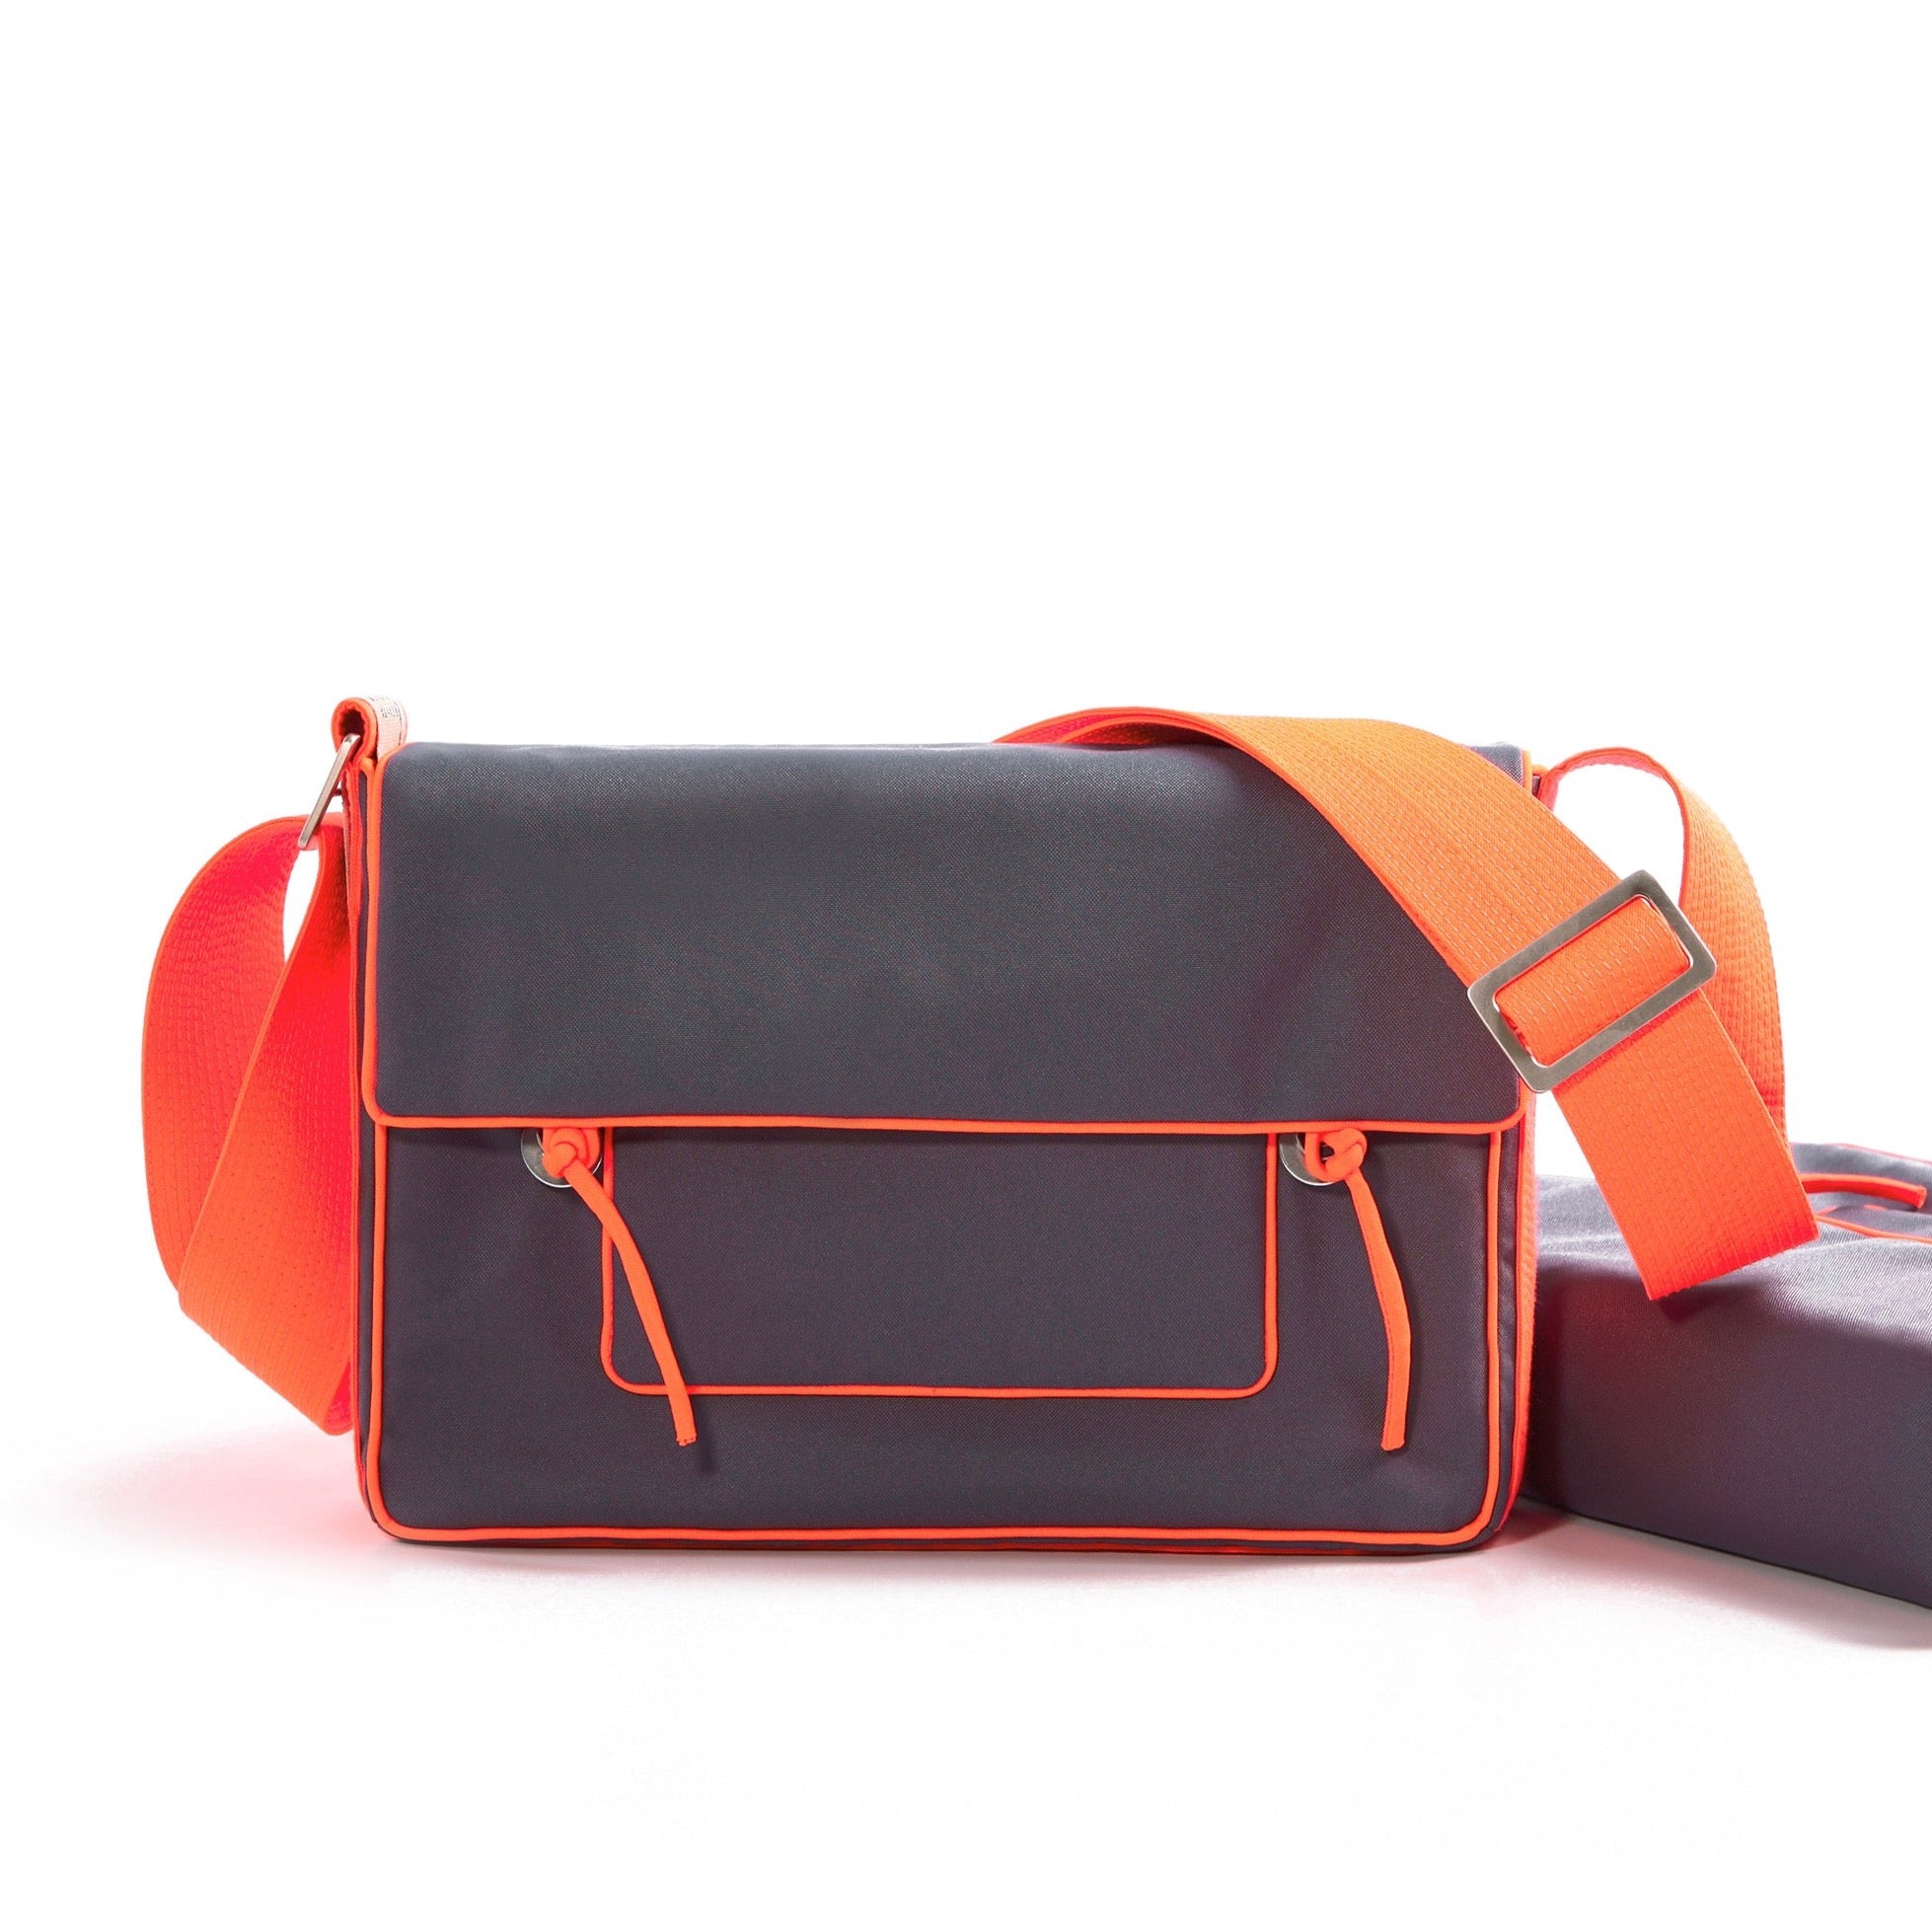 a grey preppy style  messenger bag with orange strap